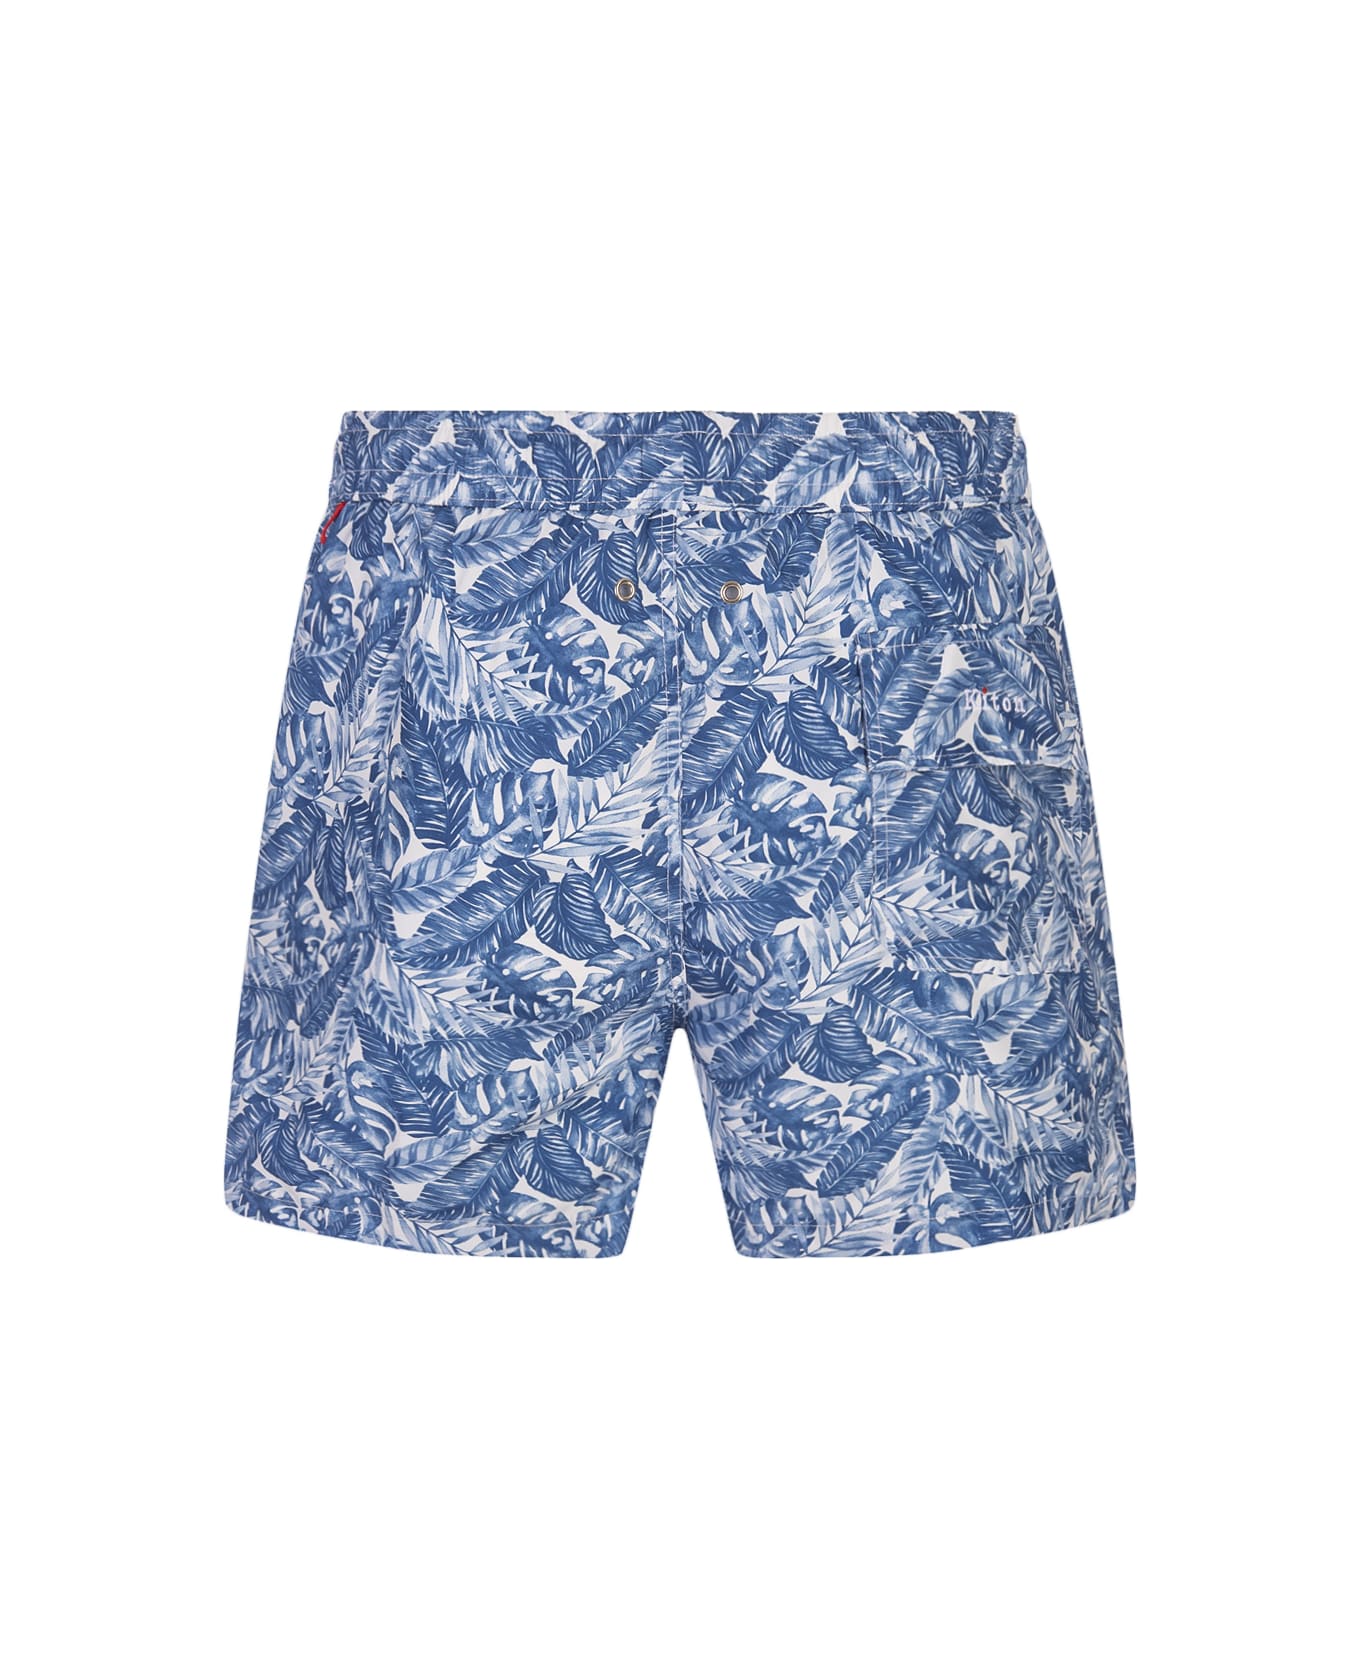 Kiton White Swim Shorts With Blue Foliage Print - Blue スイムトランクス